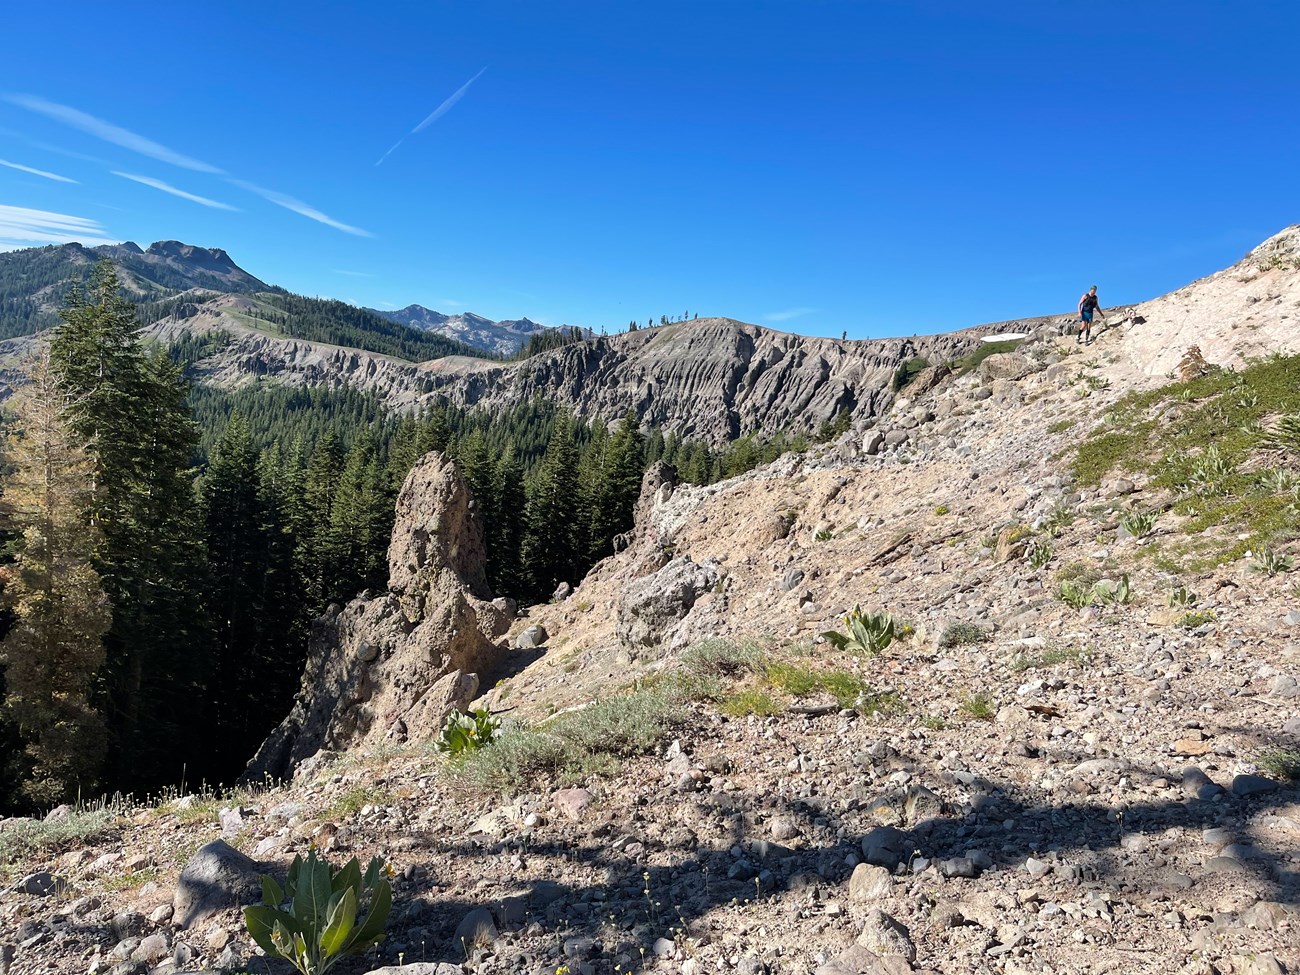 Rocky landing overlooking a steep decline. A hiker is seen in the distance